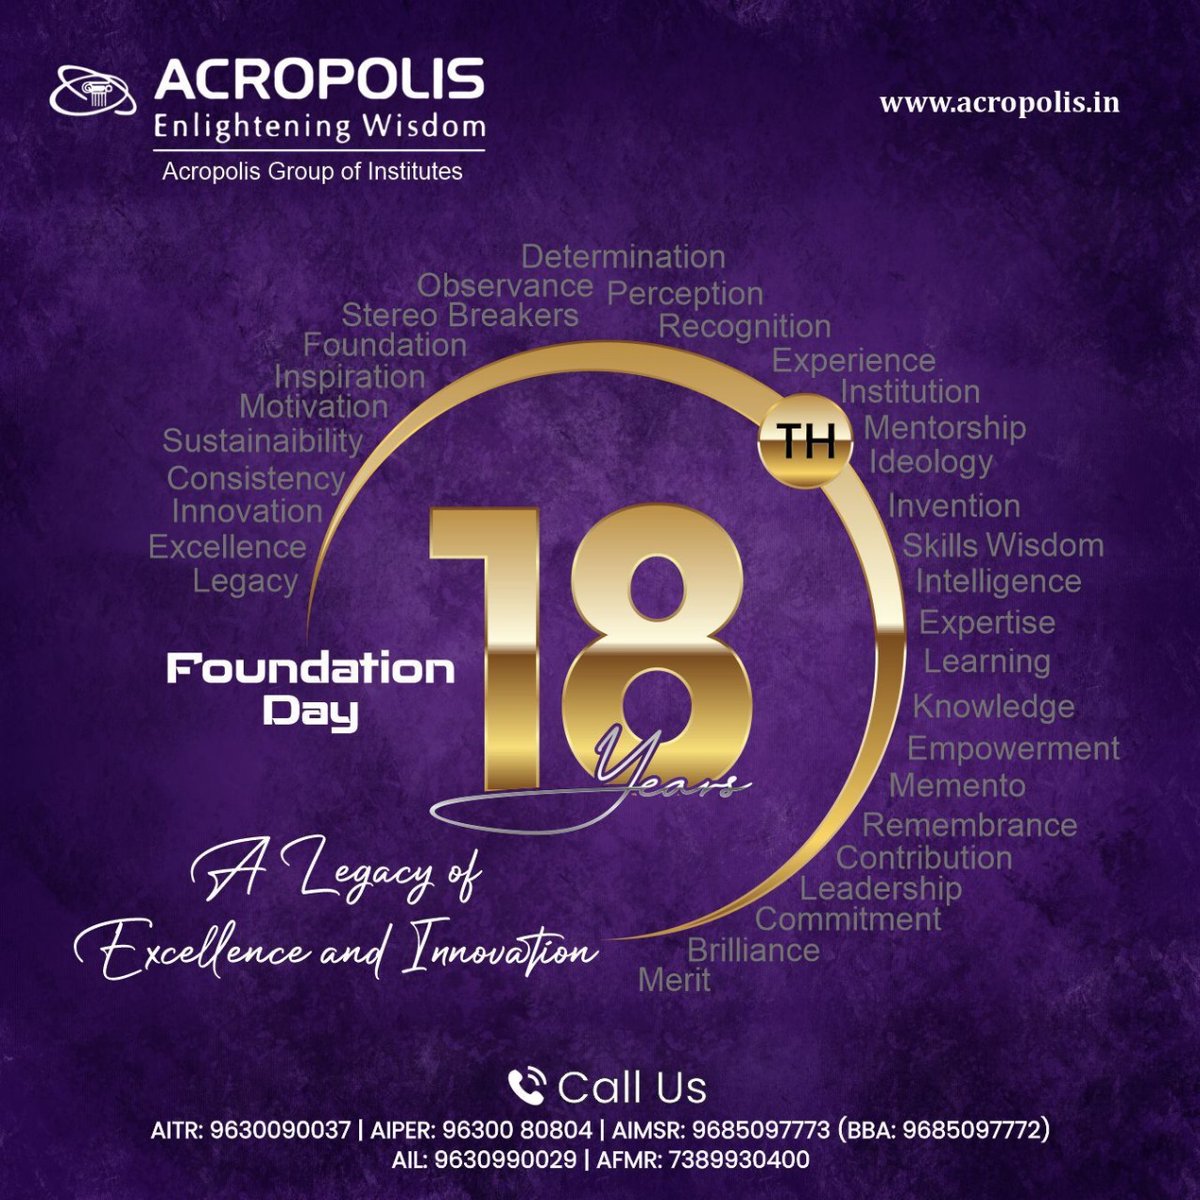 𝟏𝟖 𝐘𝐞𝐚𝐫𝐬 𝐒𝐭𝐫𝐨𝐧𝐠: 𝐎𝐮𝐫 𝐅𝐨𝐮𝐧𝐝𝐚𝐭𝐢𝐨𝐧 𝐃𝐚𝐲 🎉 𝐀 𝐋𝐞𝐠𝐚𝐜𝐲 𝐨𝐟 𝐊𝐧𝐨𝐰𝐥𝐞𝐝𝐠𝐞 𝐚𝐧𝐝 𝐄𝐦𝐩𝐨𝐰𝐞𝐫𝐦𝐞𝐧𝐭, 𝐅𝐨𝐫𝐠𝐢𝐧𝐠 𝐄𝐱𝐜𝐞𝐥𝐥𝐞𝐧𝐜𝐞 𝐚𝐧𝐝 𝐈𝐧𝐧𝐨𝐯𝐚𝐭𝐢𝐨𝐧. 
.
#AcropolisCollegelndore #Acropolis #FoundationDay #18YearsStrong